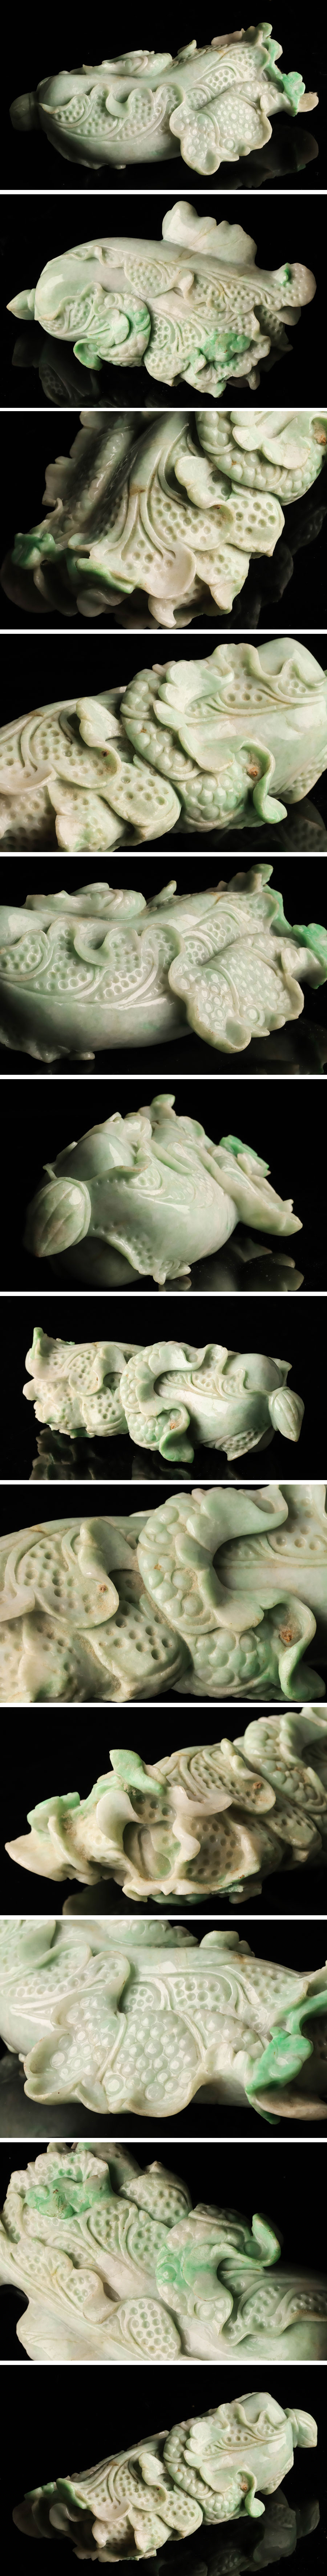 【SALE最新作】中国美術 翡翠彫刻 白菜置物 重量2270g TD979 その他